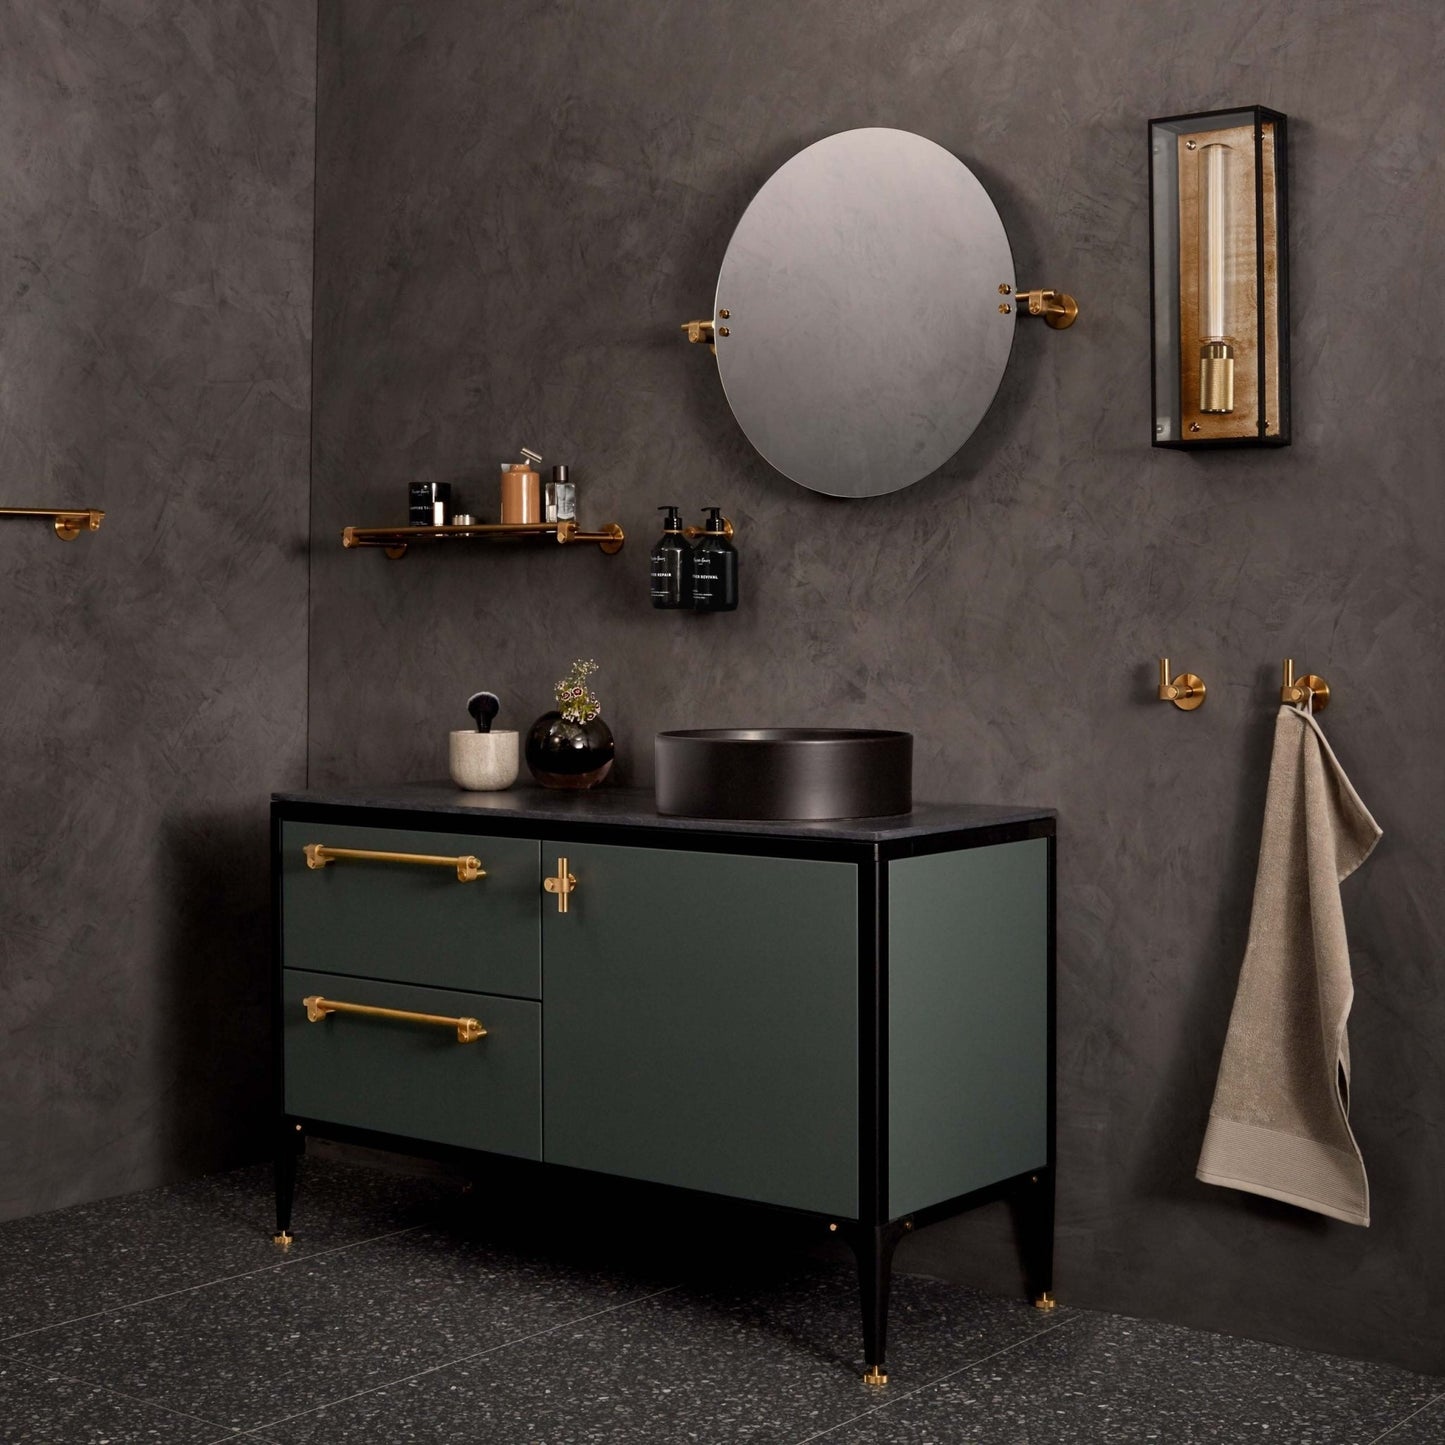 Bathroom Cast Shelf Medium / Gun Metal - |VESIMI Design| Luxury and Rustic bathrooms online